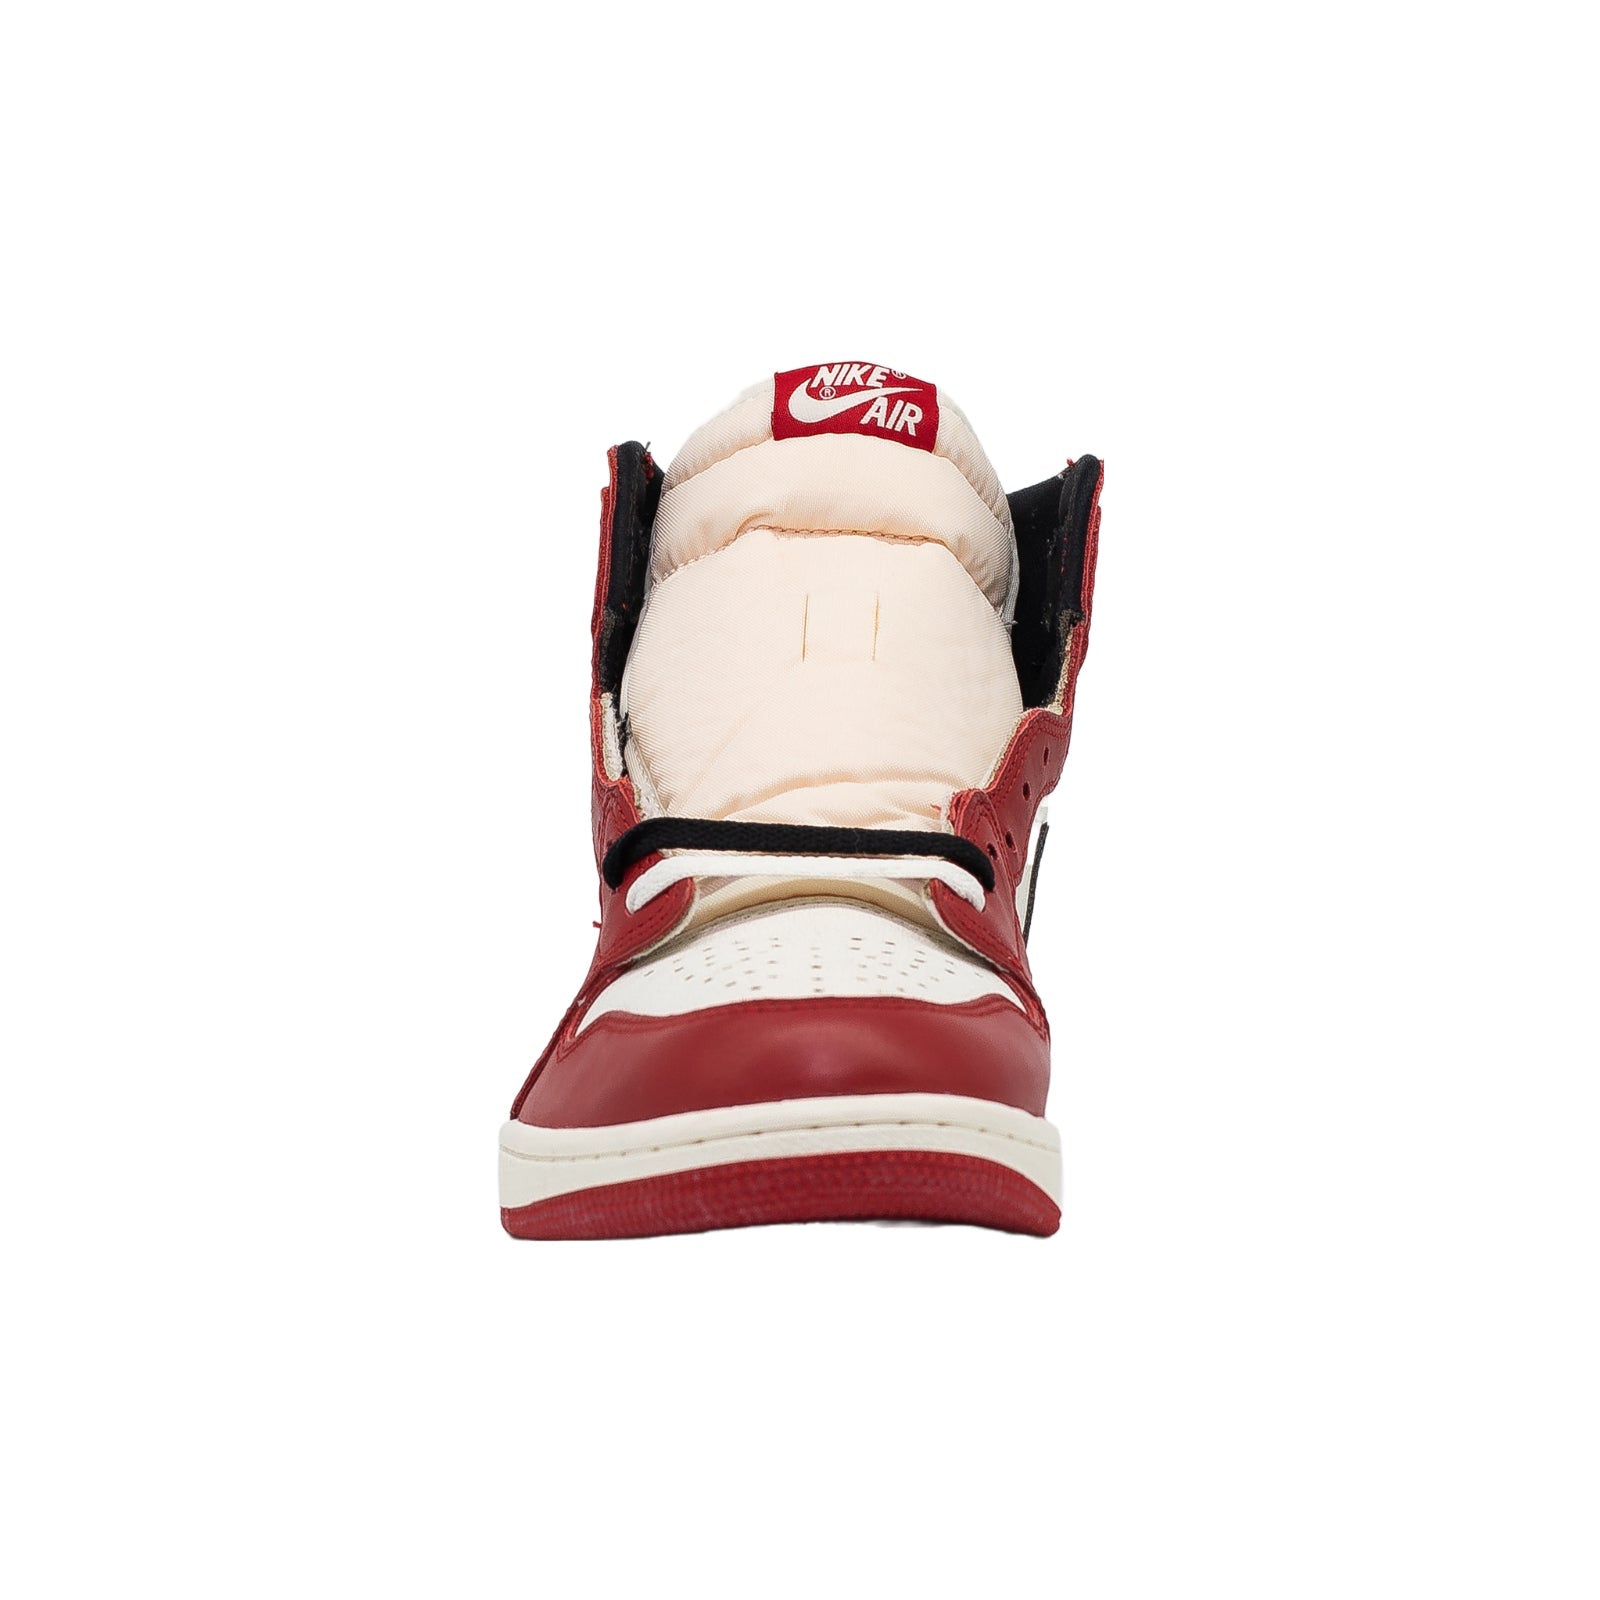 Der Air Jordan 2 als erster AJ in der Doernbecher-Freestyle Kollektion